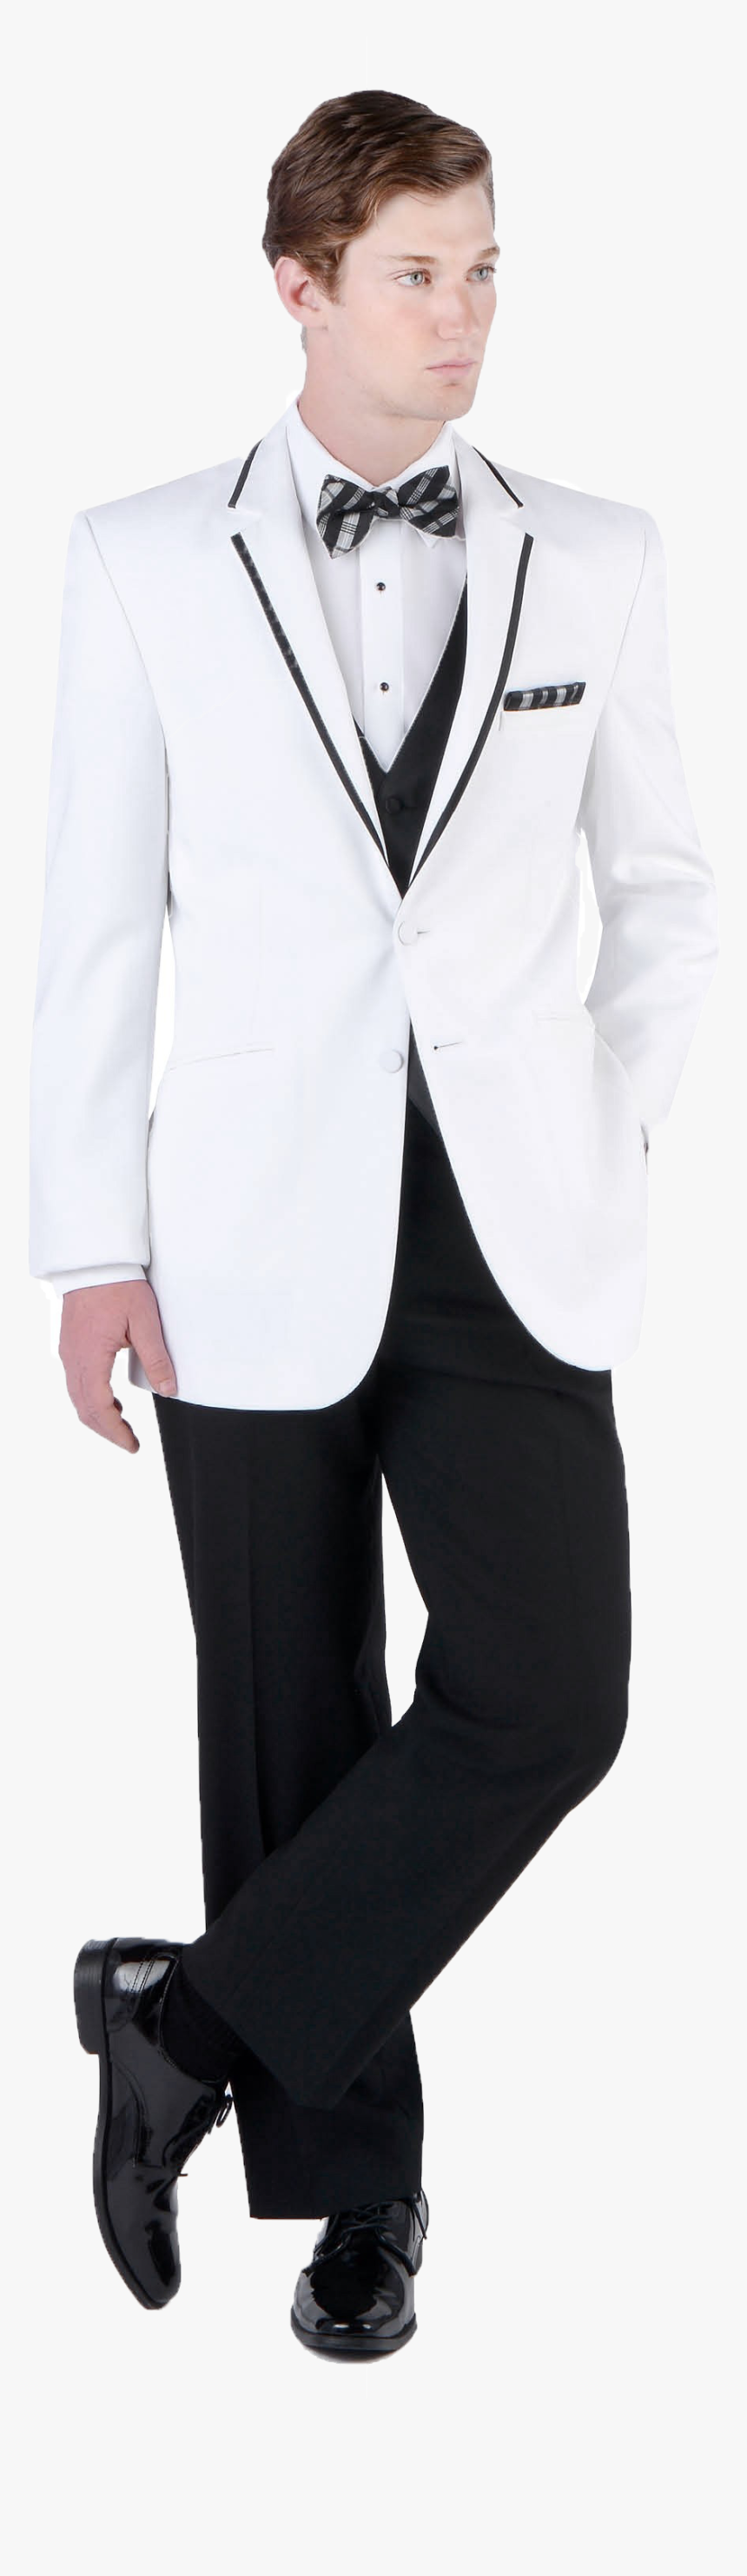 White Tuxedo Png Free Image Download - Tuxedo, Transparent Png, Free Download